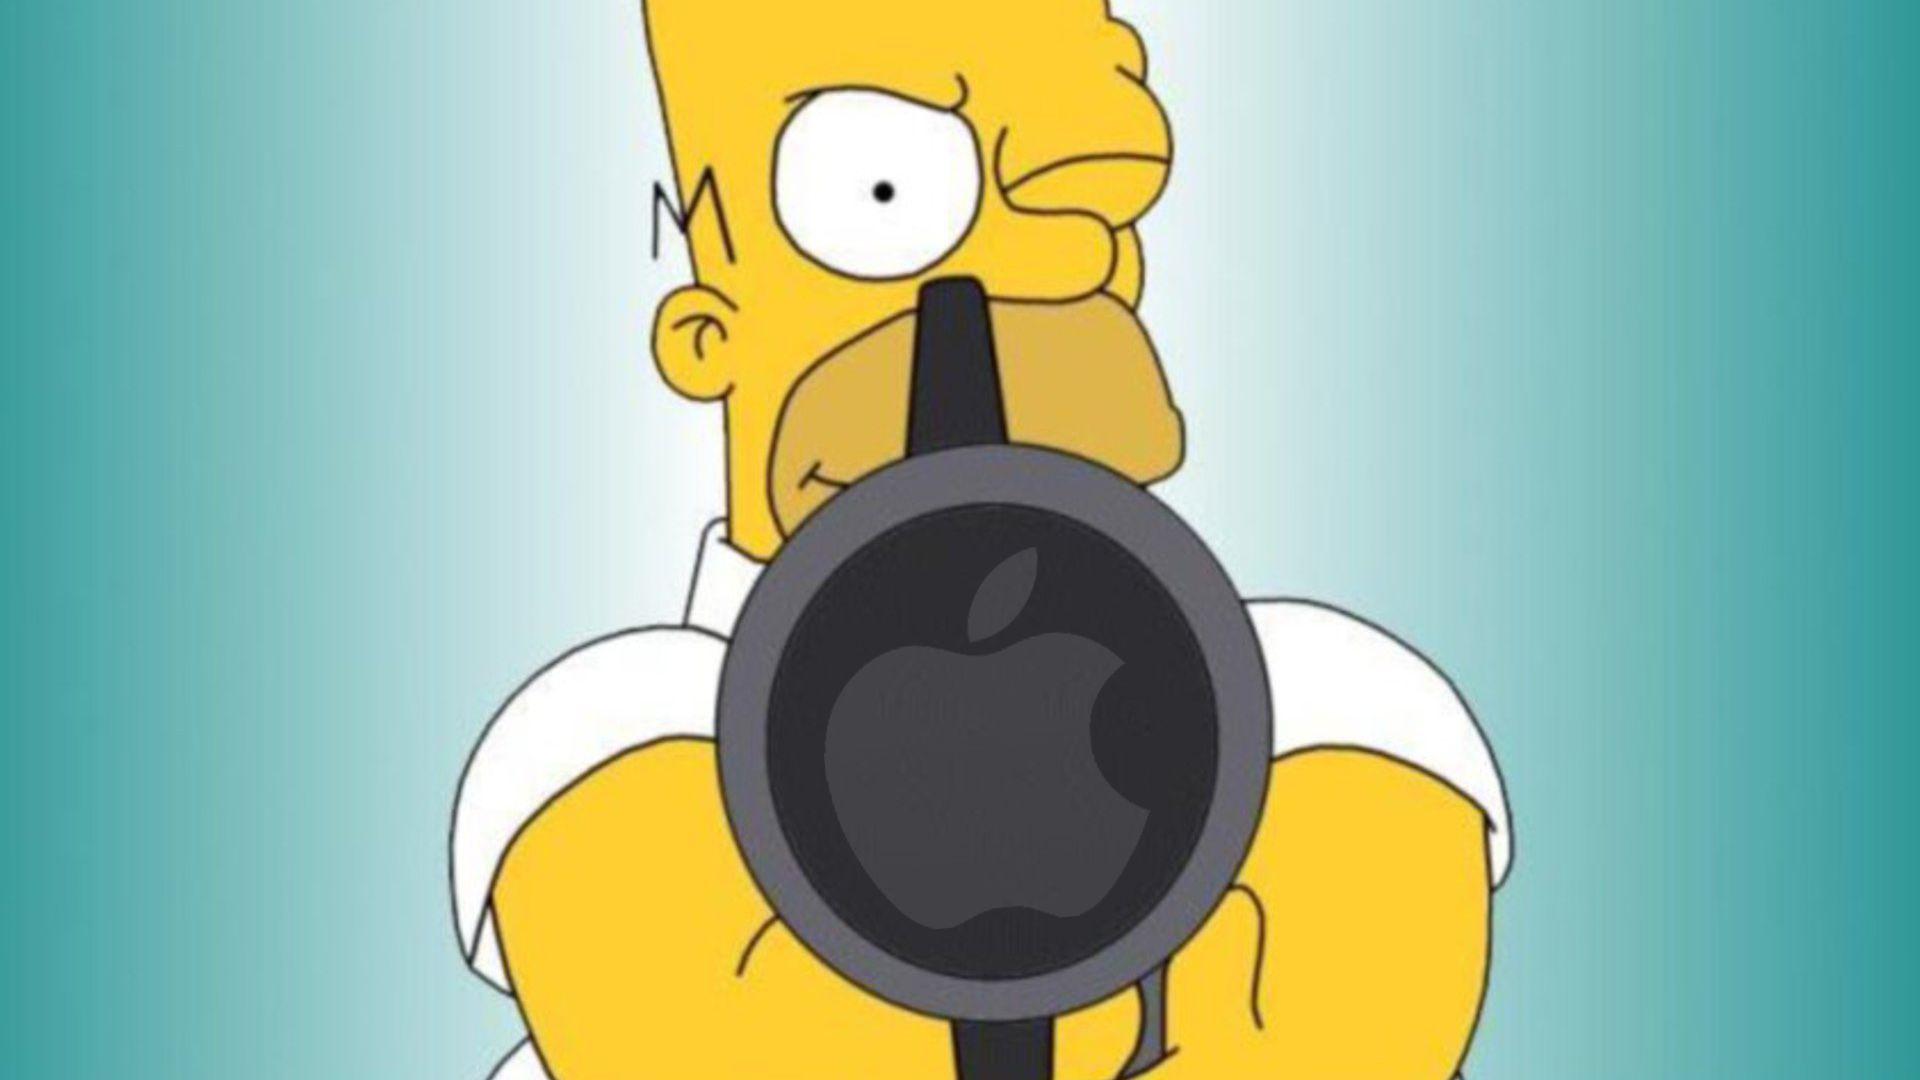 Apple Homer Simpson Wallpaper